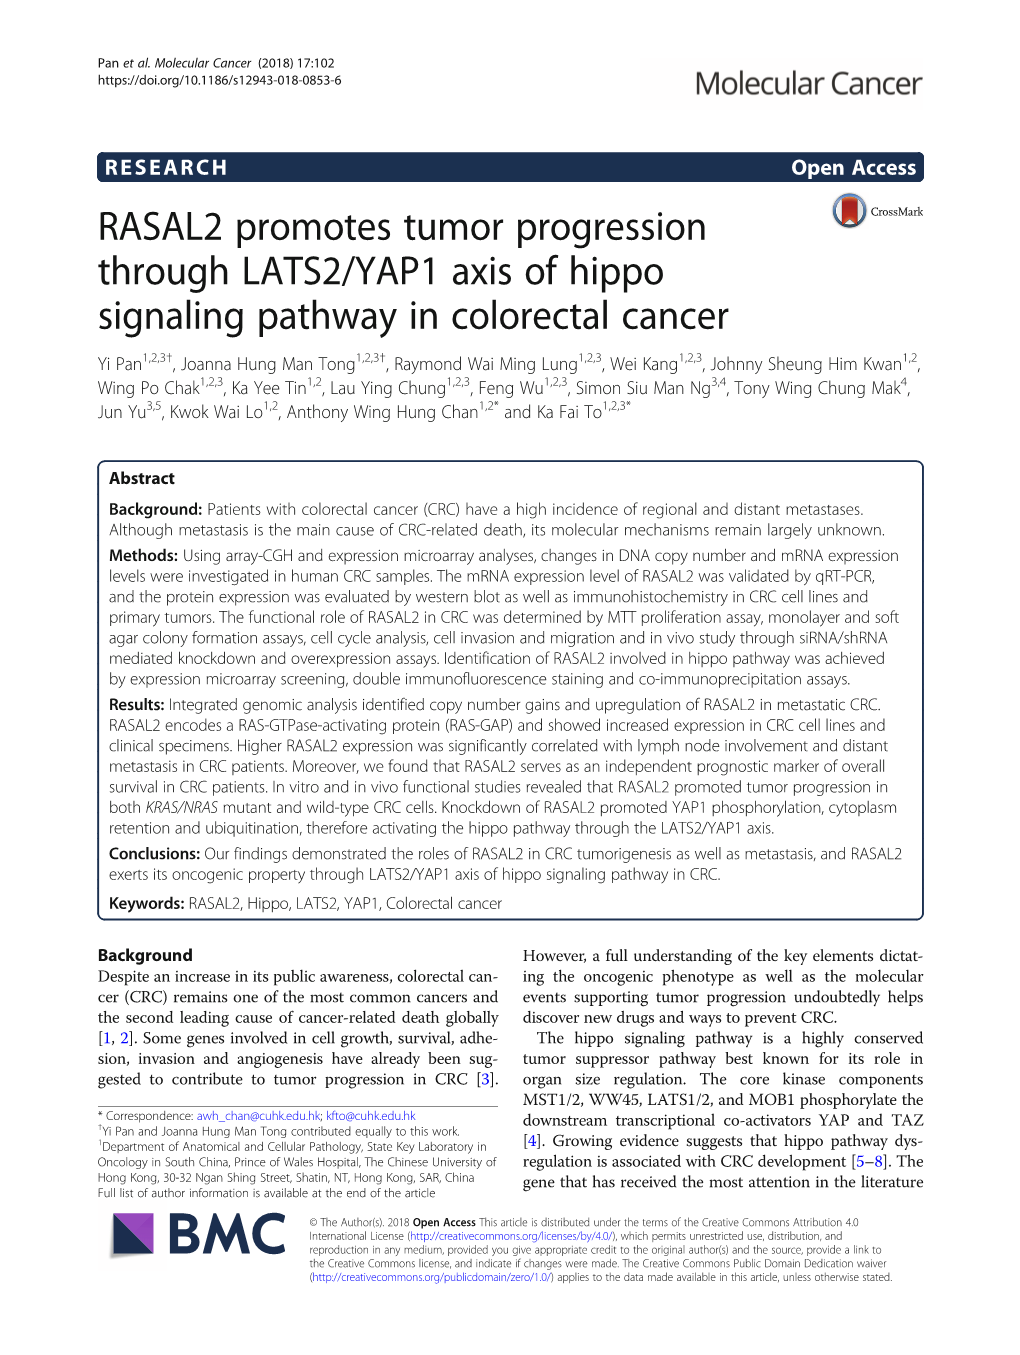 RASAL2 Promotes Tumor Progression Through LATS2/YAP1 Axis of Hippo